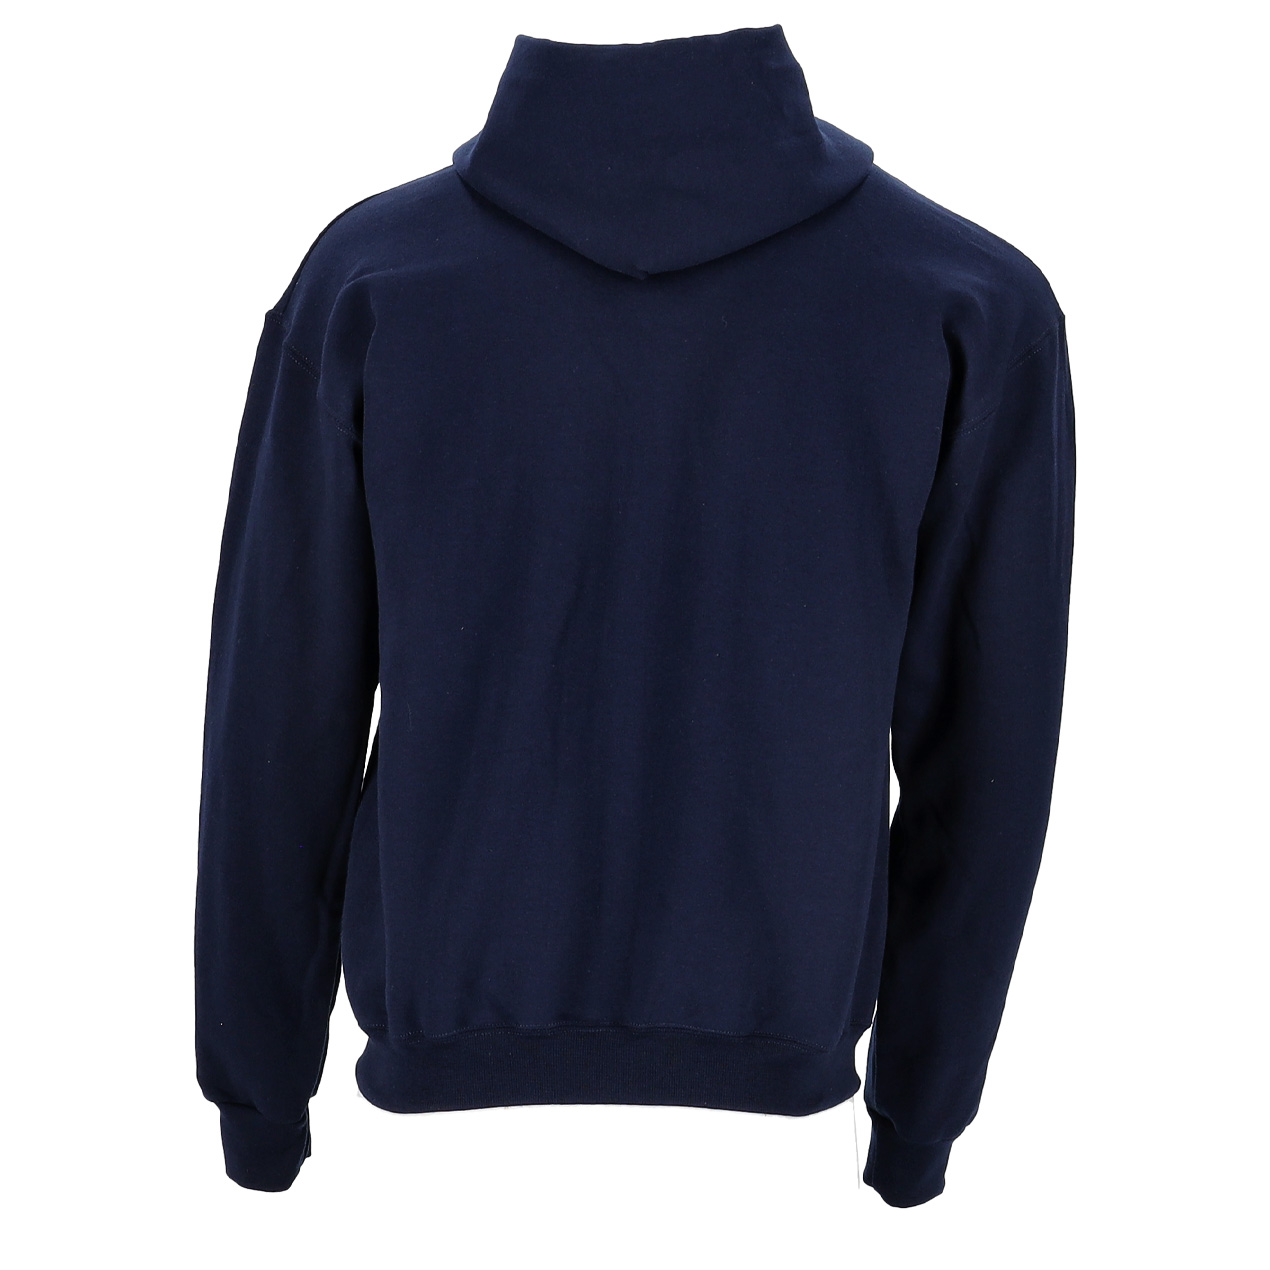 Samco - #645 Zipper Sweatshirt #8645R